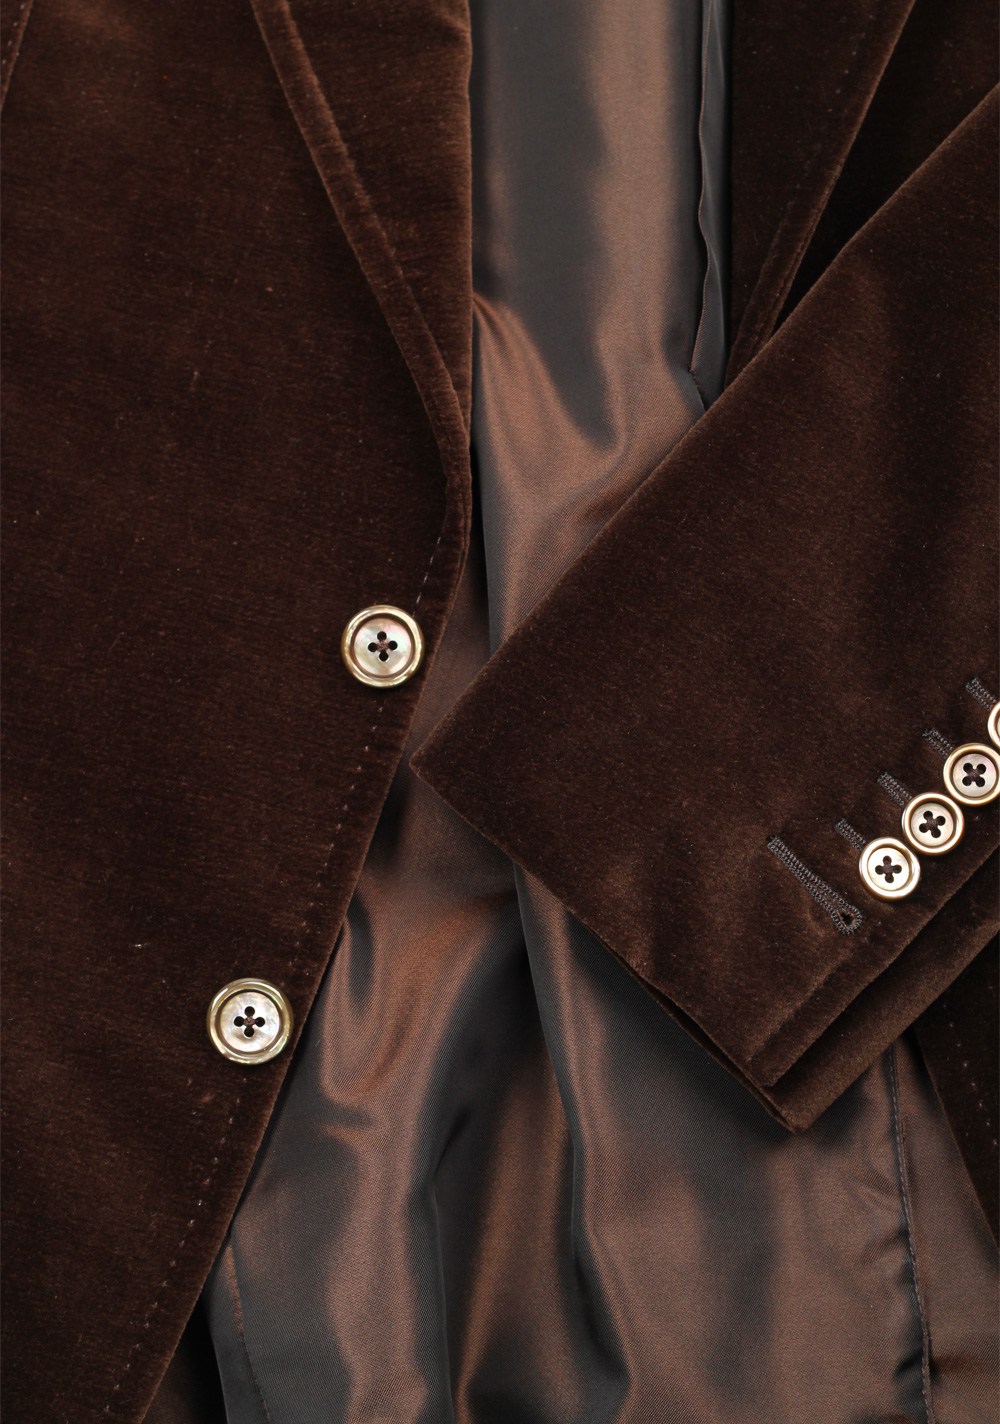 TOM FORD Shelton Brown Velvet Sport Coat Size 46 / 36R In Cotton | Costume Limité